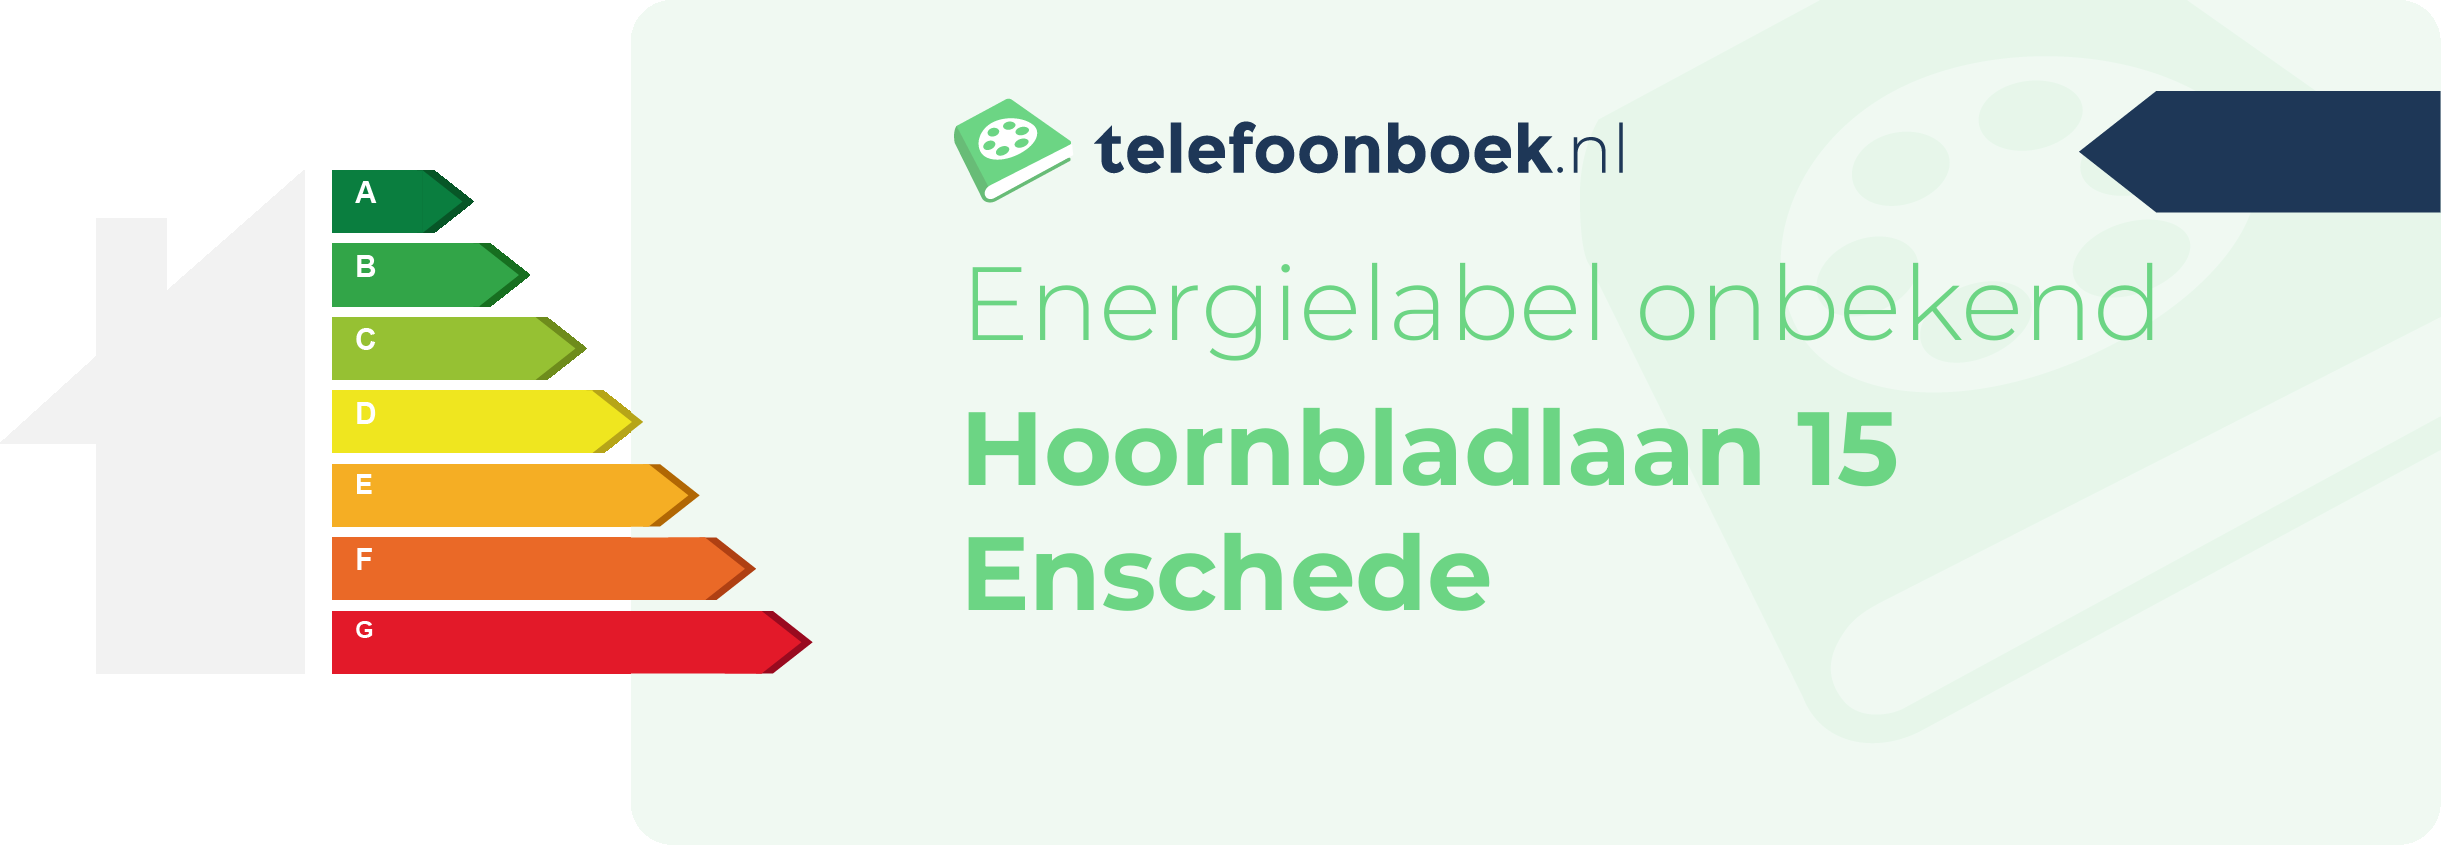 Energielabel Hoornbladlaan 15 Enschede